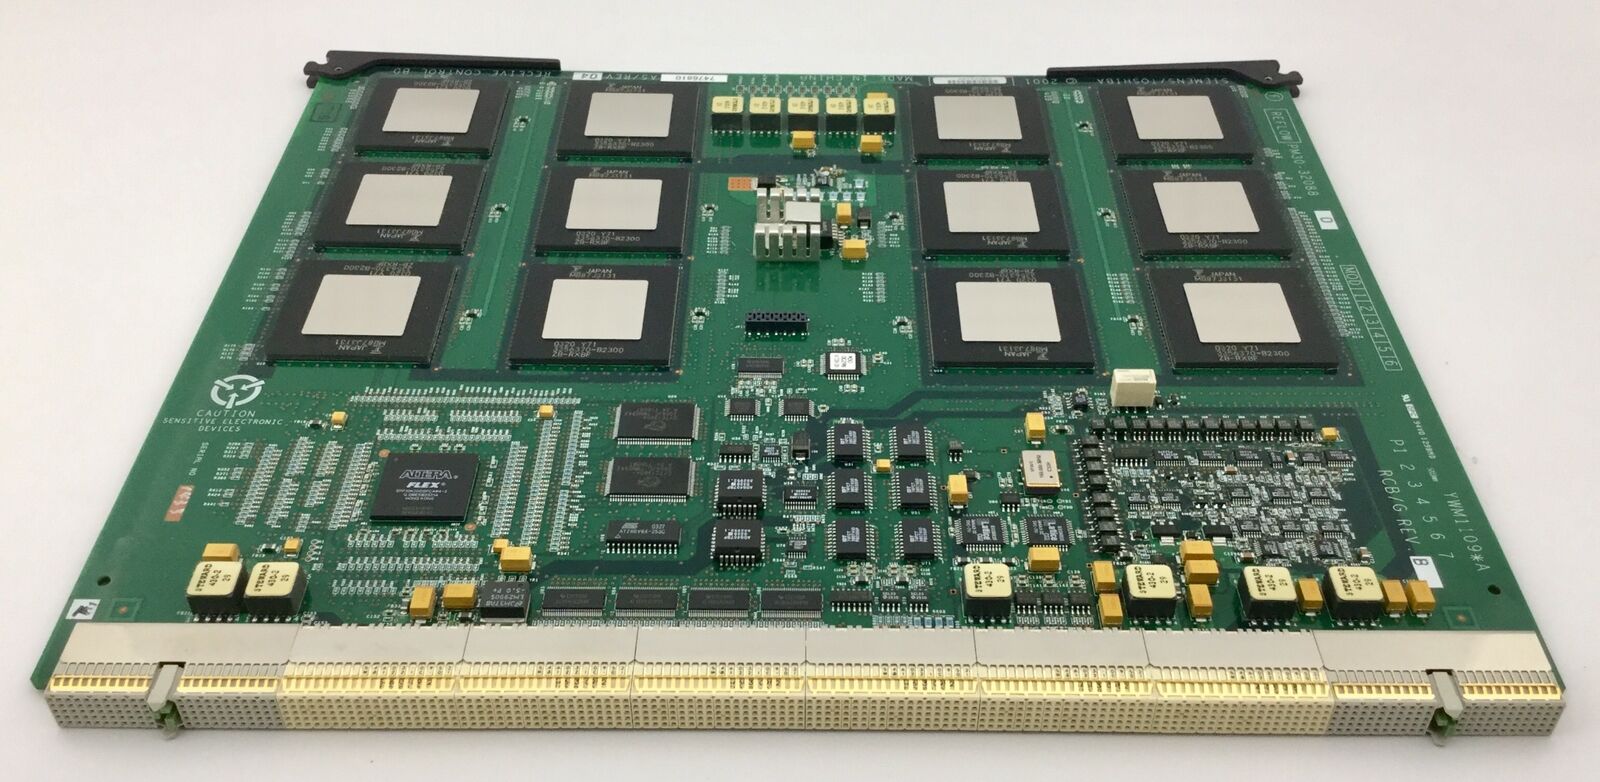 Toshiba  SSA-770A Ultrasound PM30-32088 Receive Control Board DIAGNOSTIC ULTRASOUND MACHINES FOR SALE